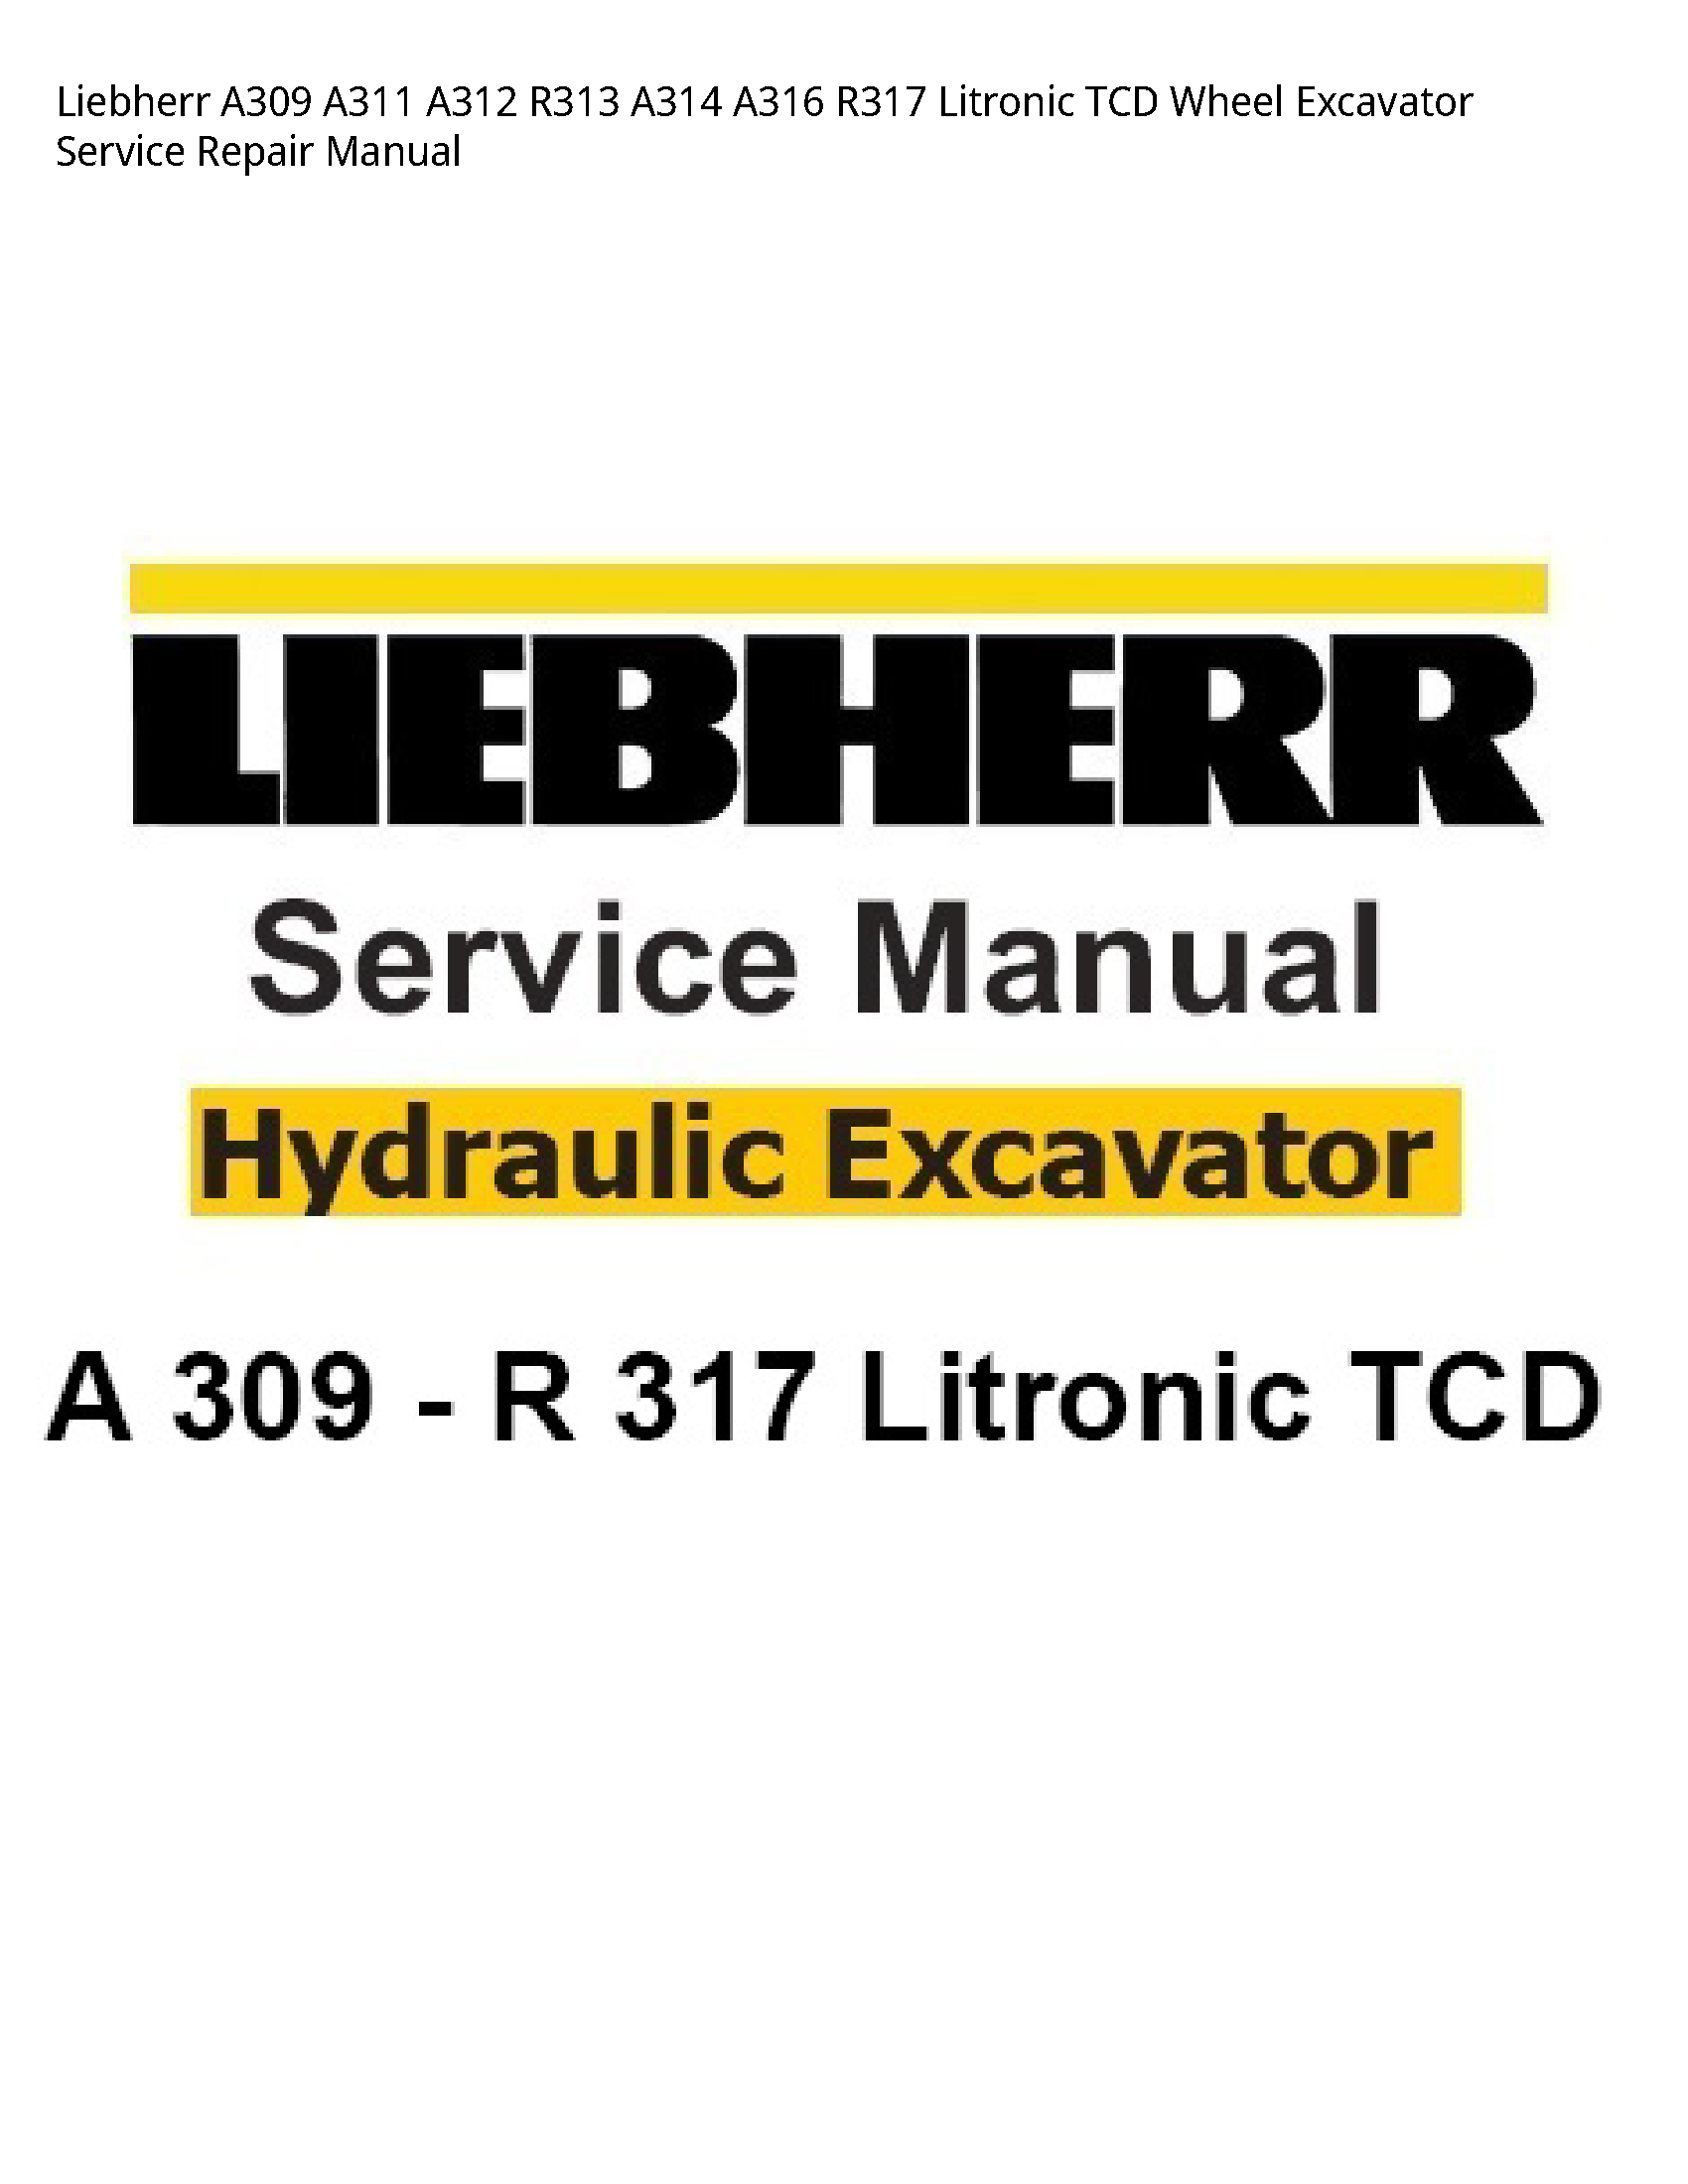 Liebherr A309 Litronic TCD Wheel Excavator manual